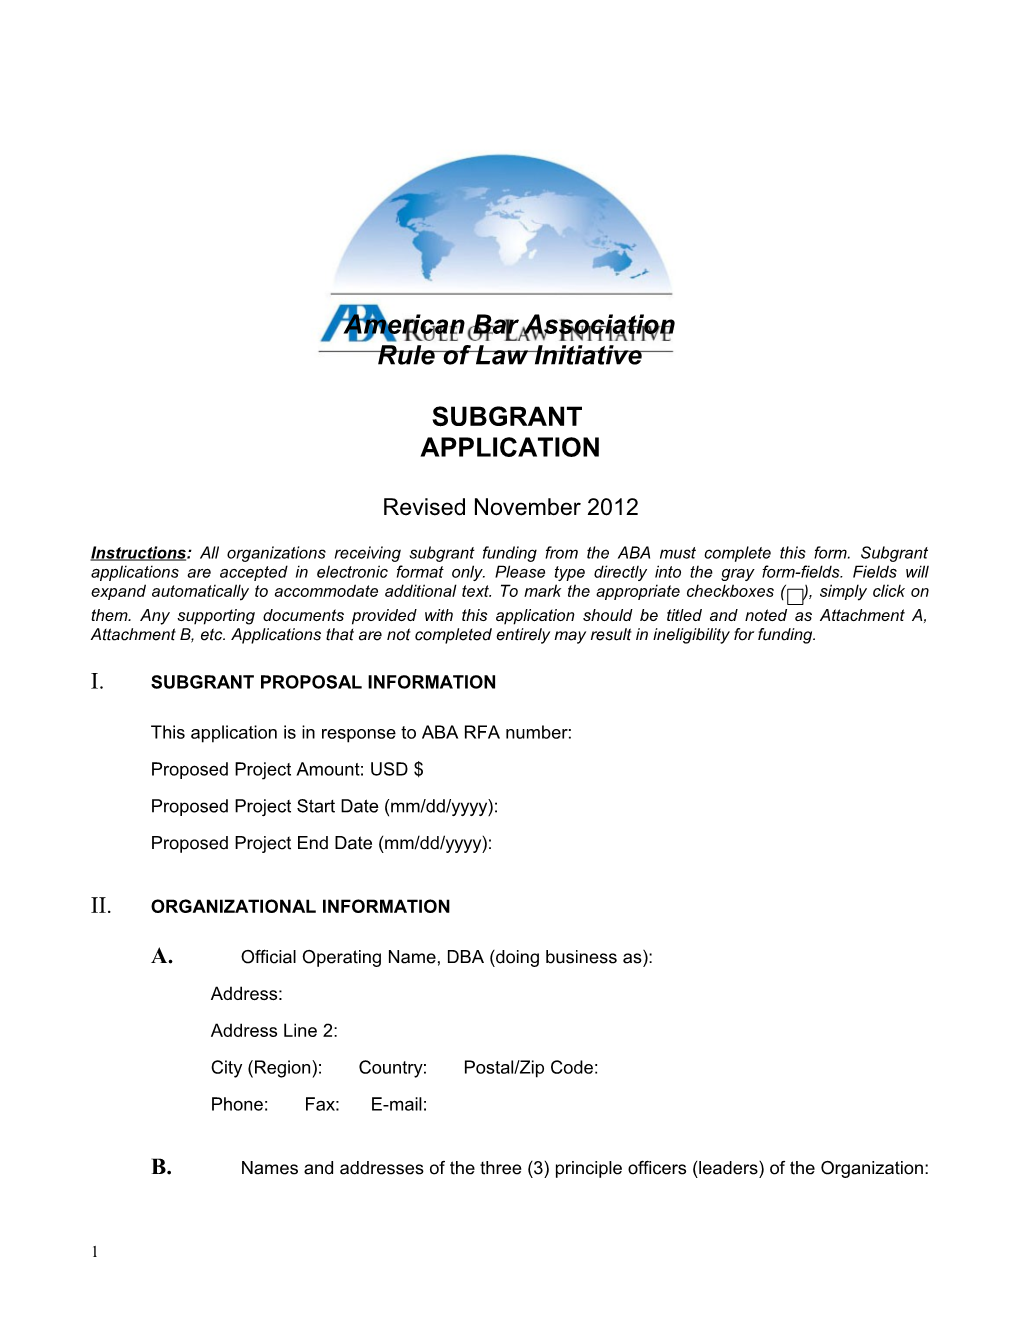 ABA-ROLI Subgrant Application